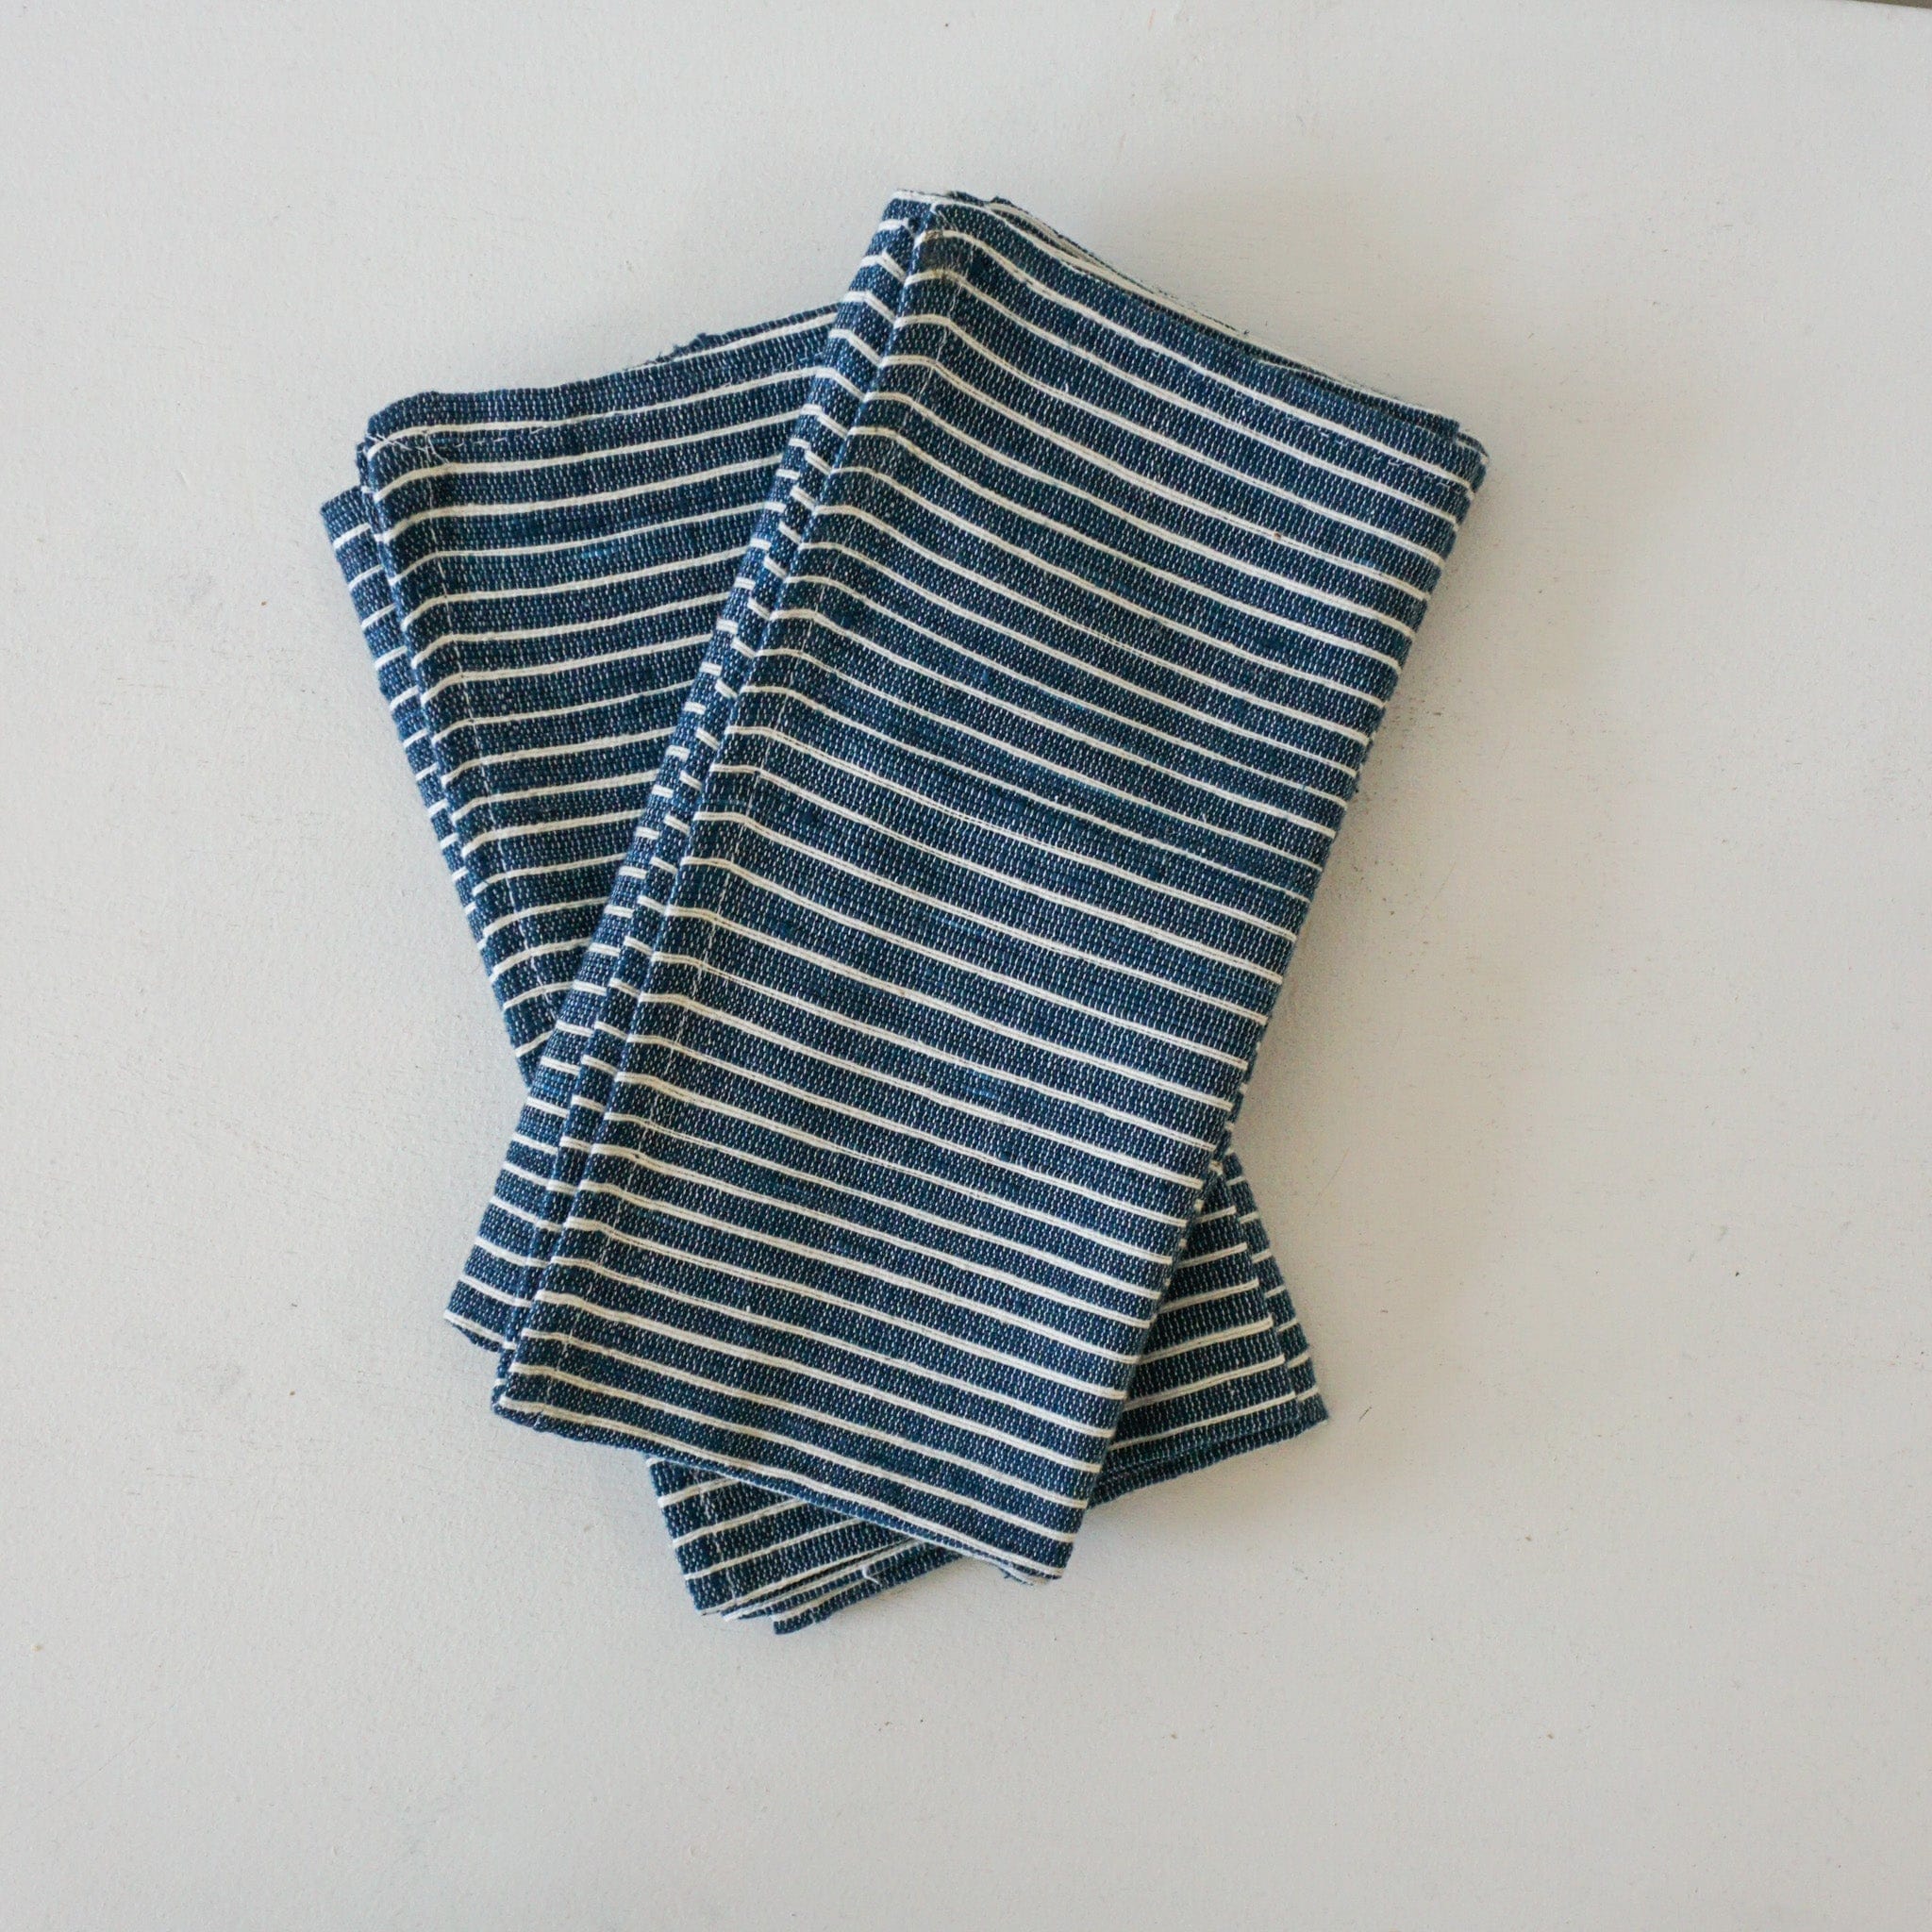 Spirited Cloth Linens Striped Napkins - Navy with White Stripes